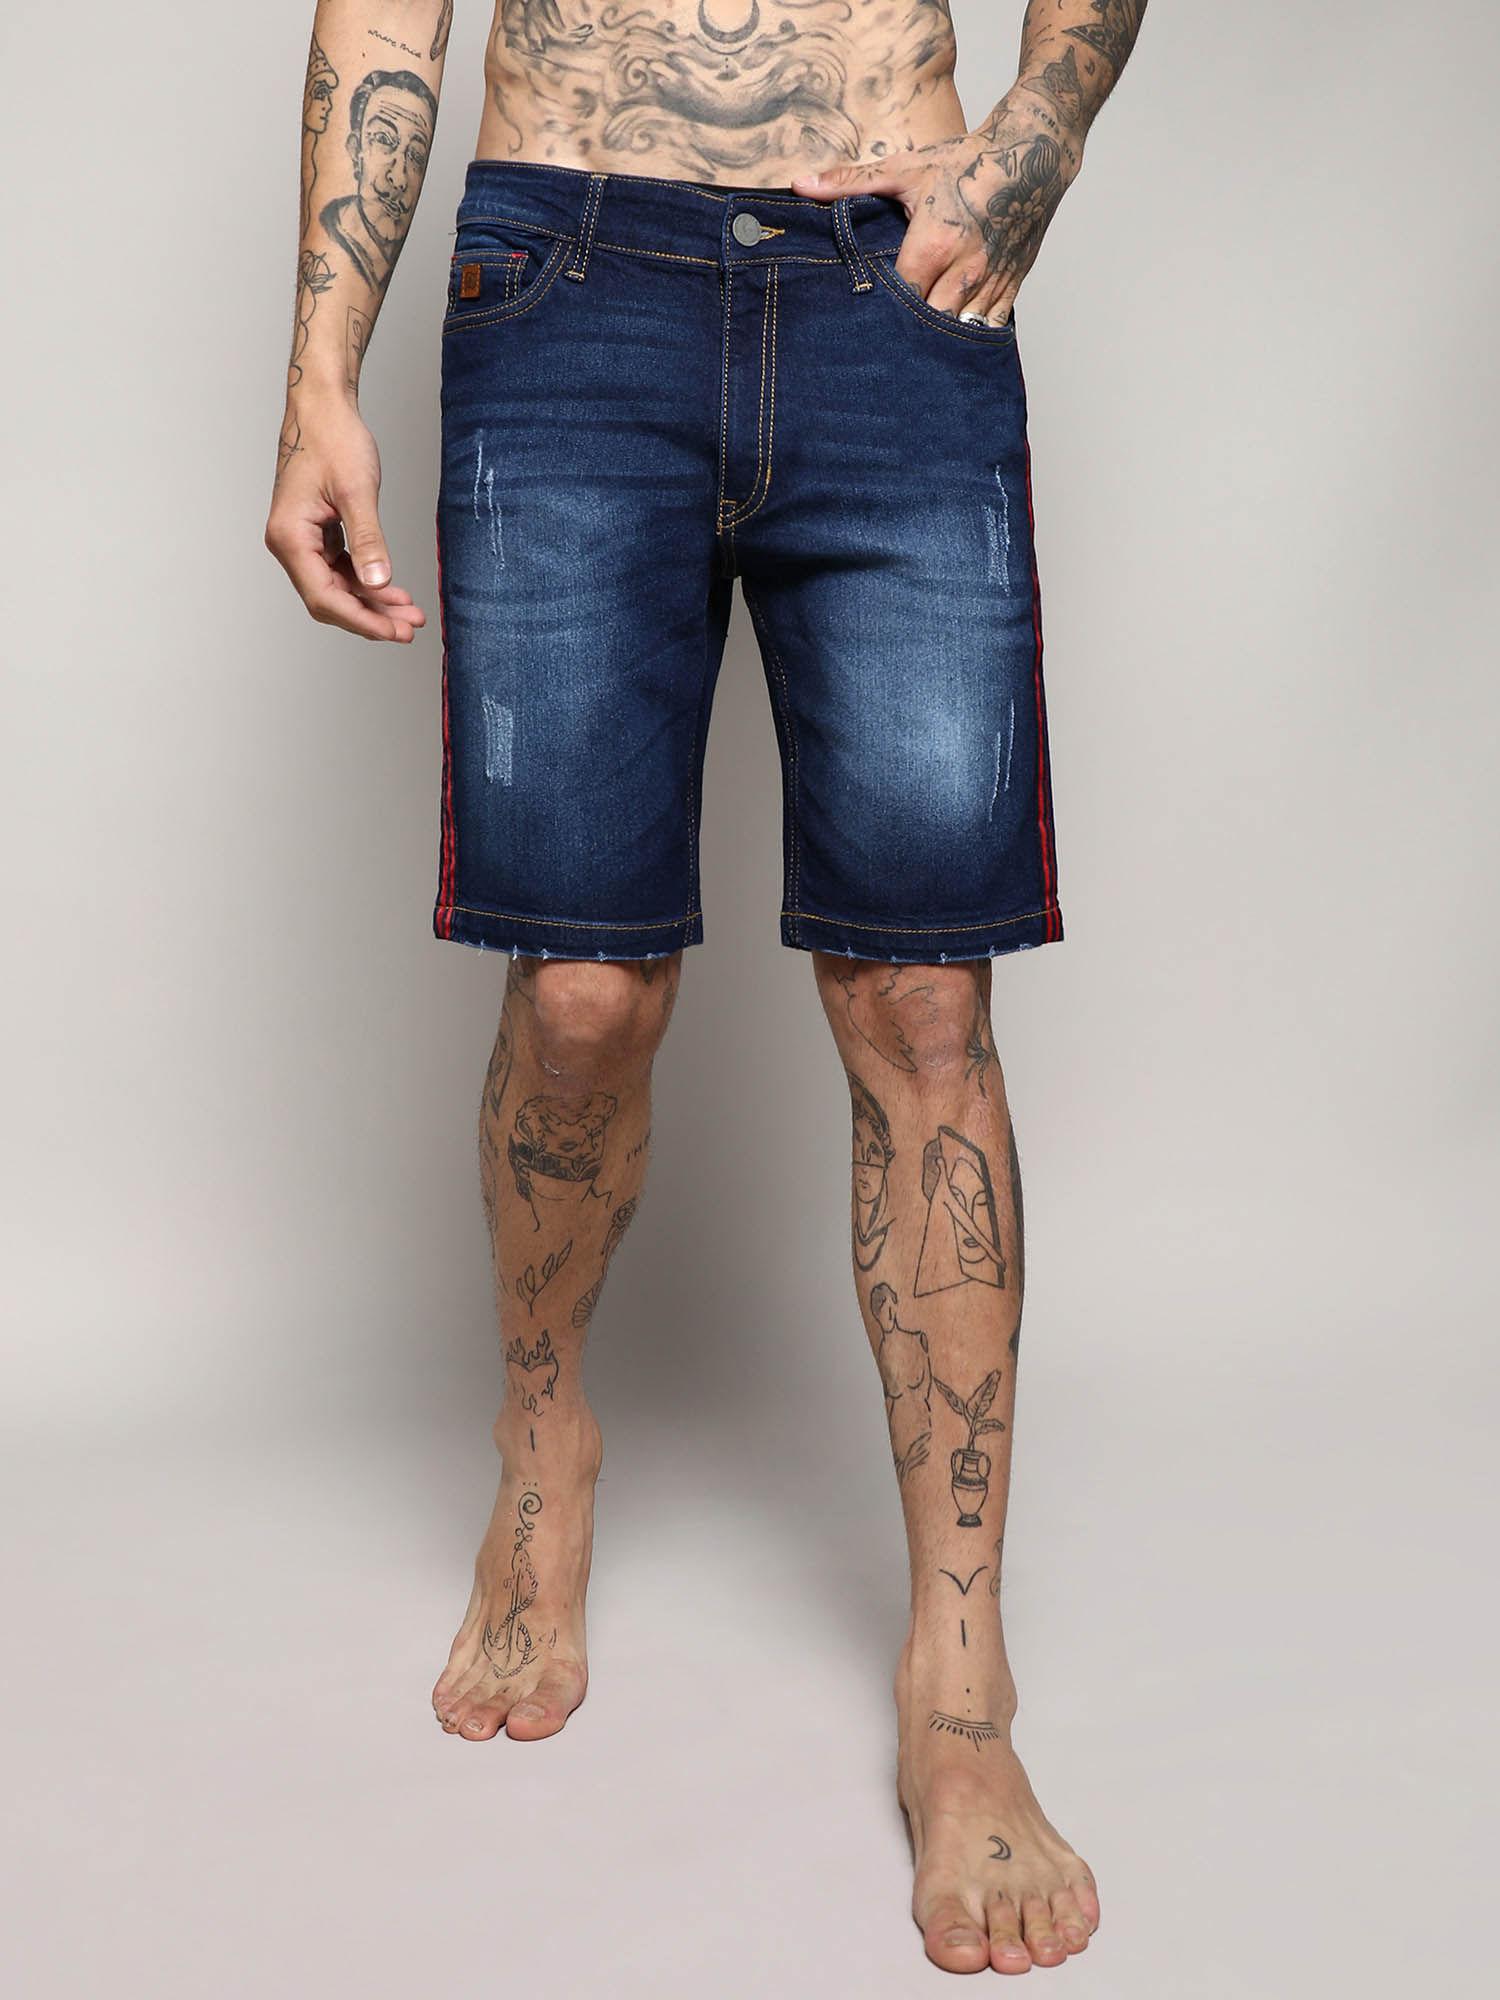 mens navy blue contrast side striped denim shorts